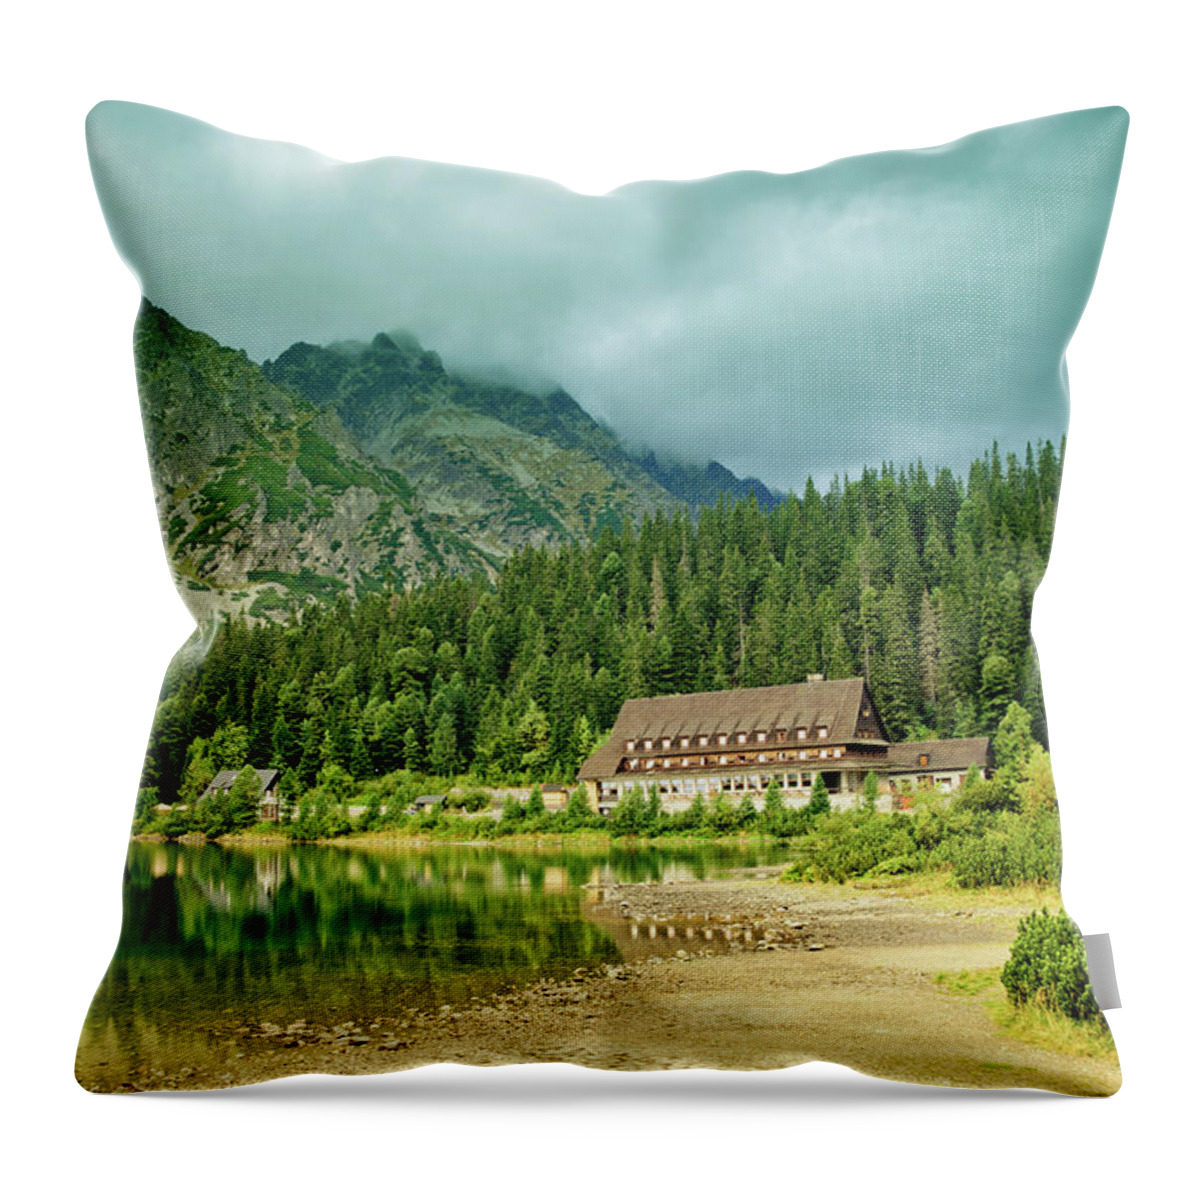 Scenics Throw Pillow featuring the photograph Strbske Pleso - Mountain Lake by Yorkfoto